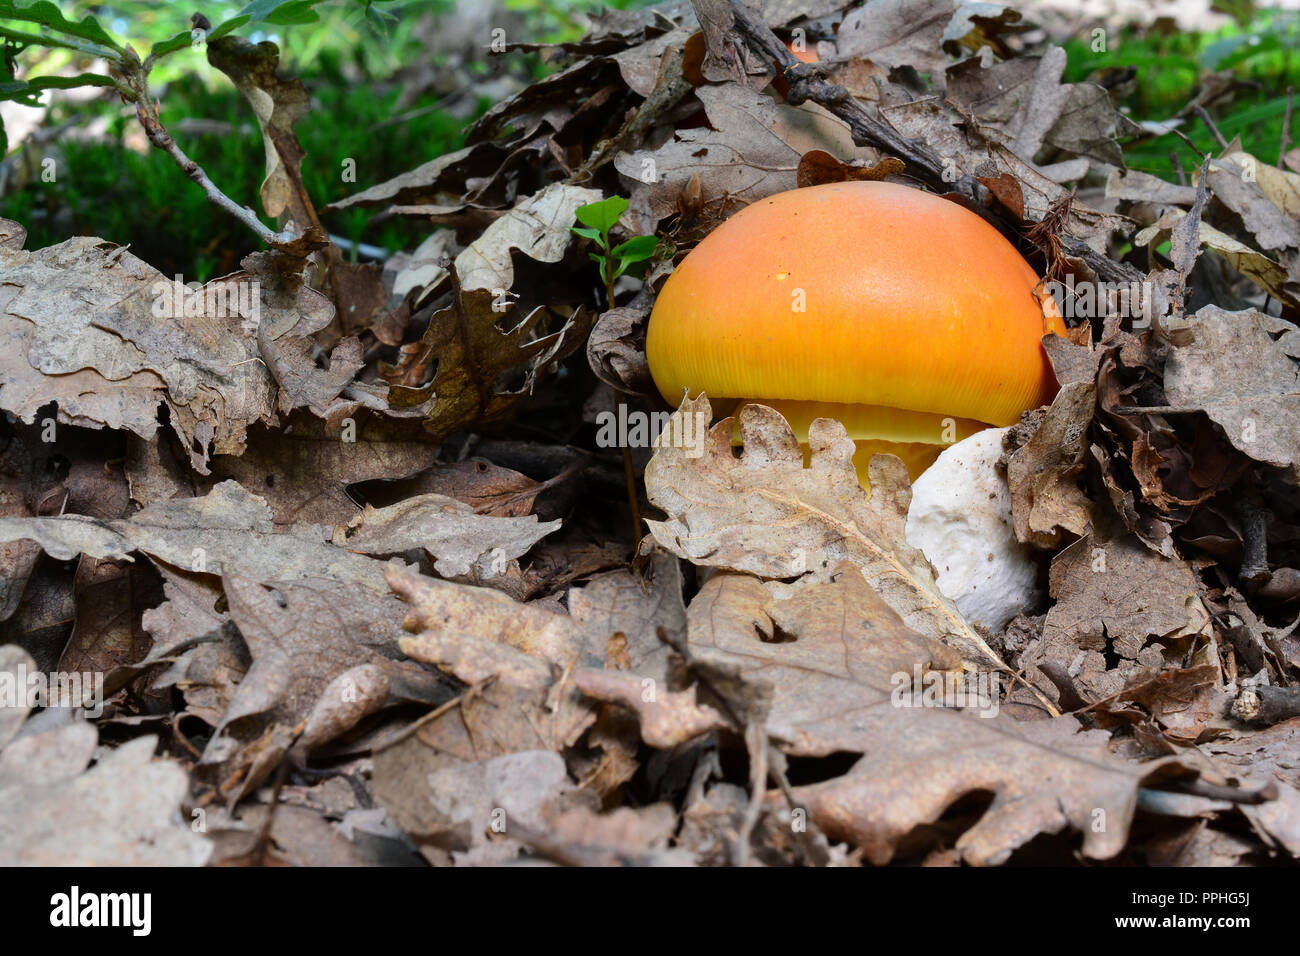 Hidden treasure, two nice specimen of Amanita caesarea or Caesar's mushrooms under the leaves in natural habitat, oak forest Stock Photo